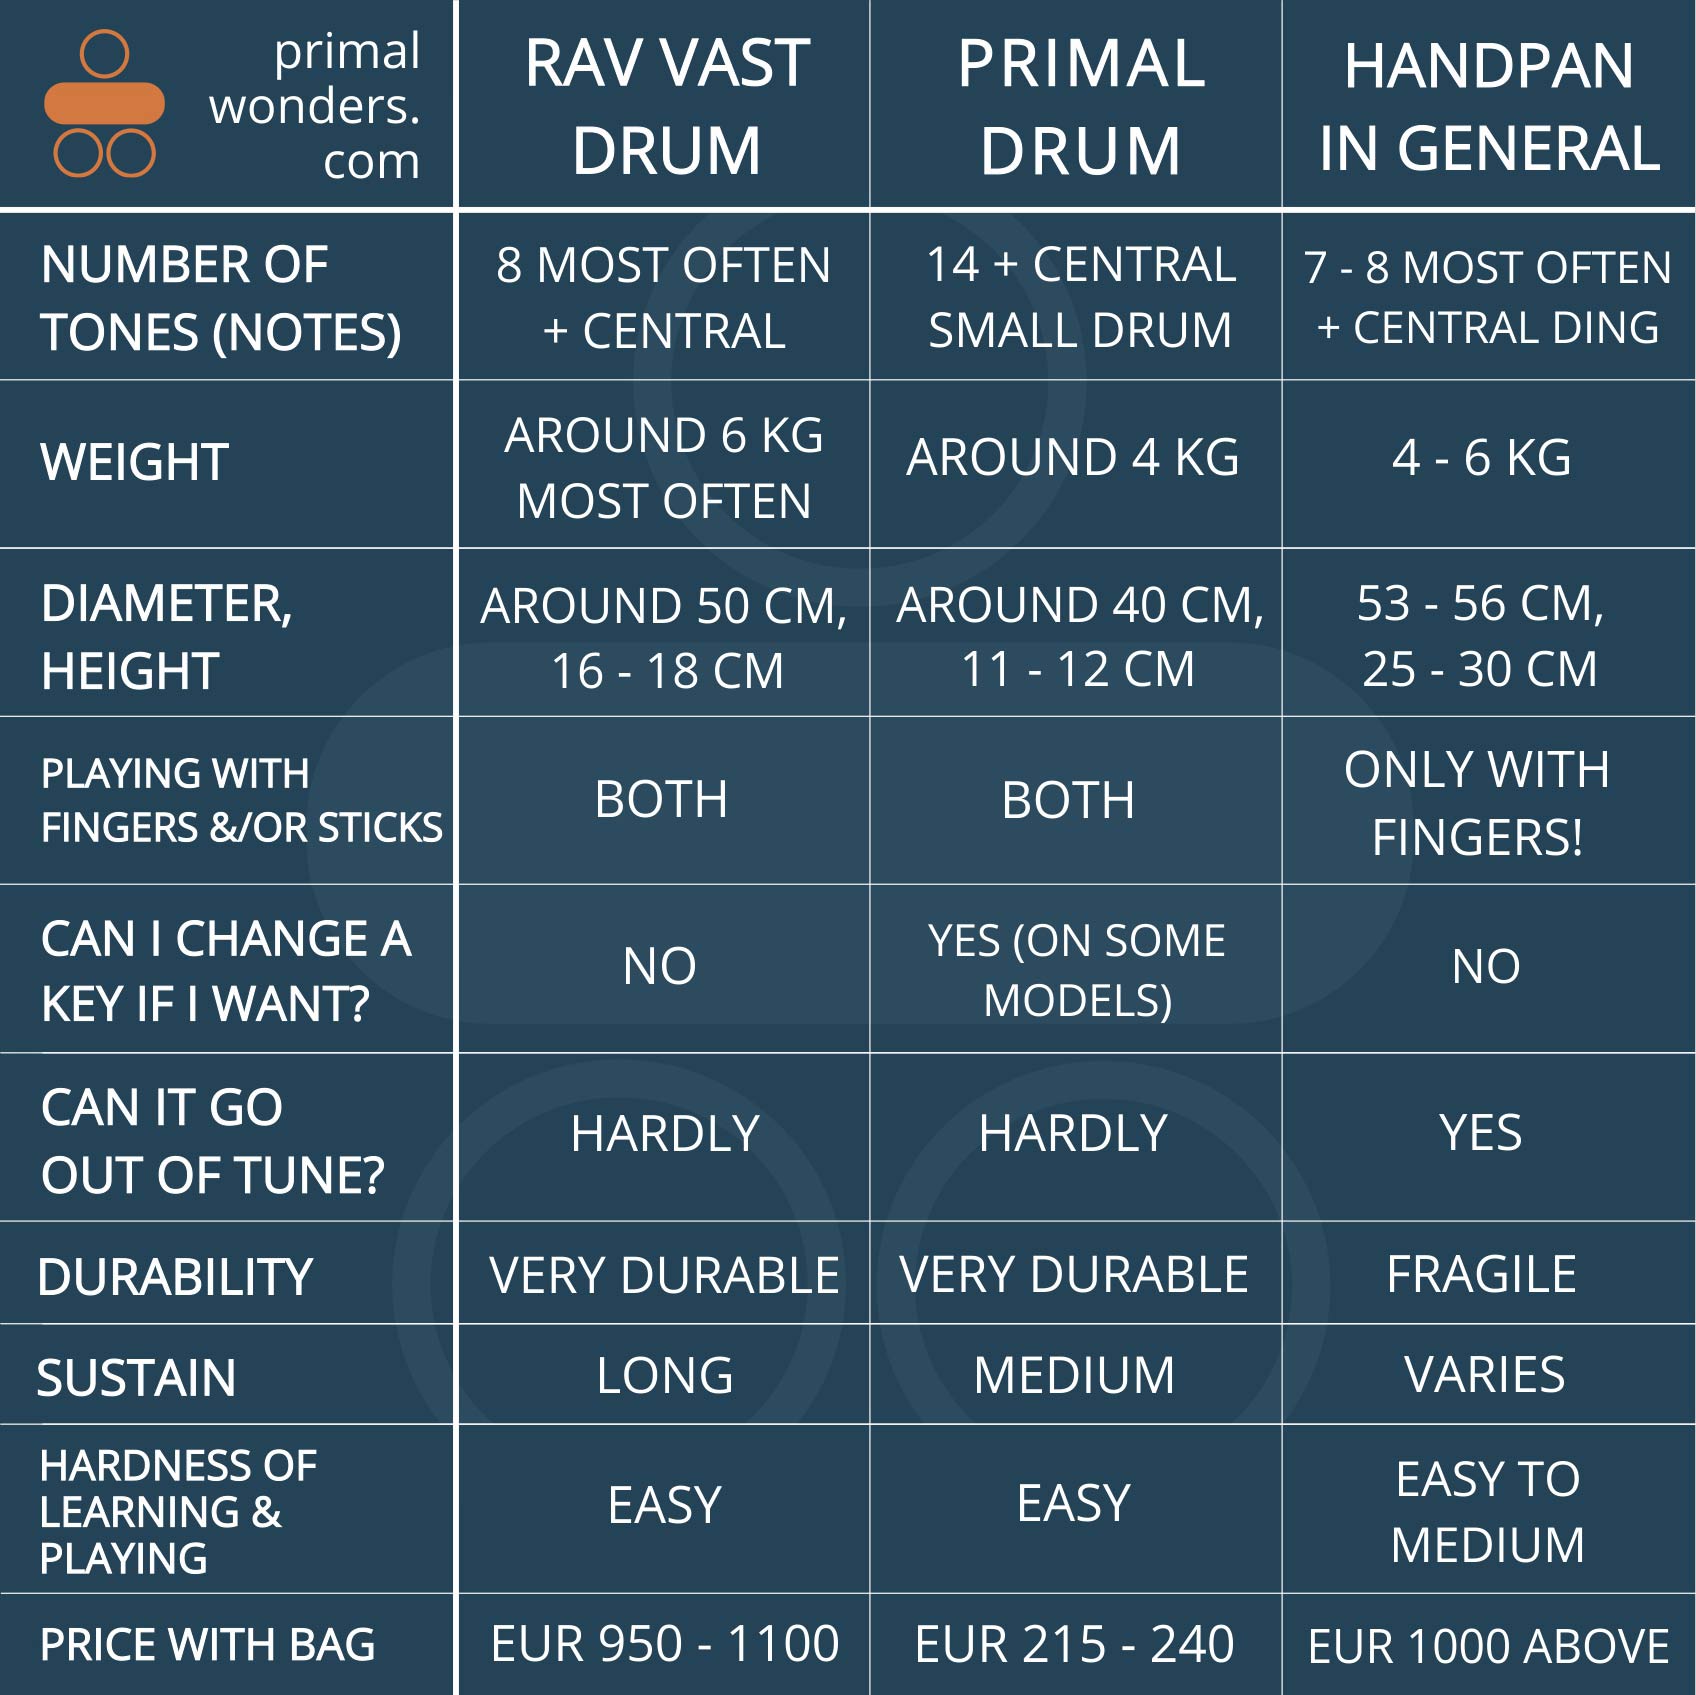 comparison-differences-between-primal-drum-rav-vast-handpan-EN